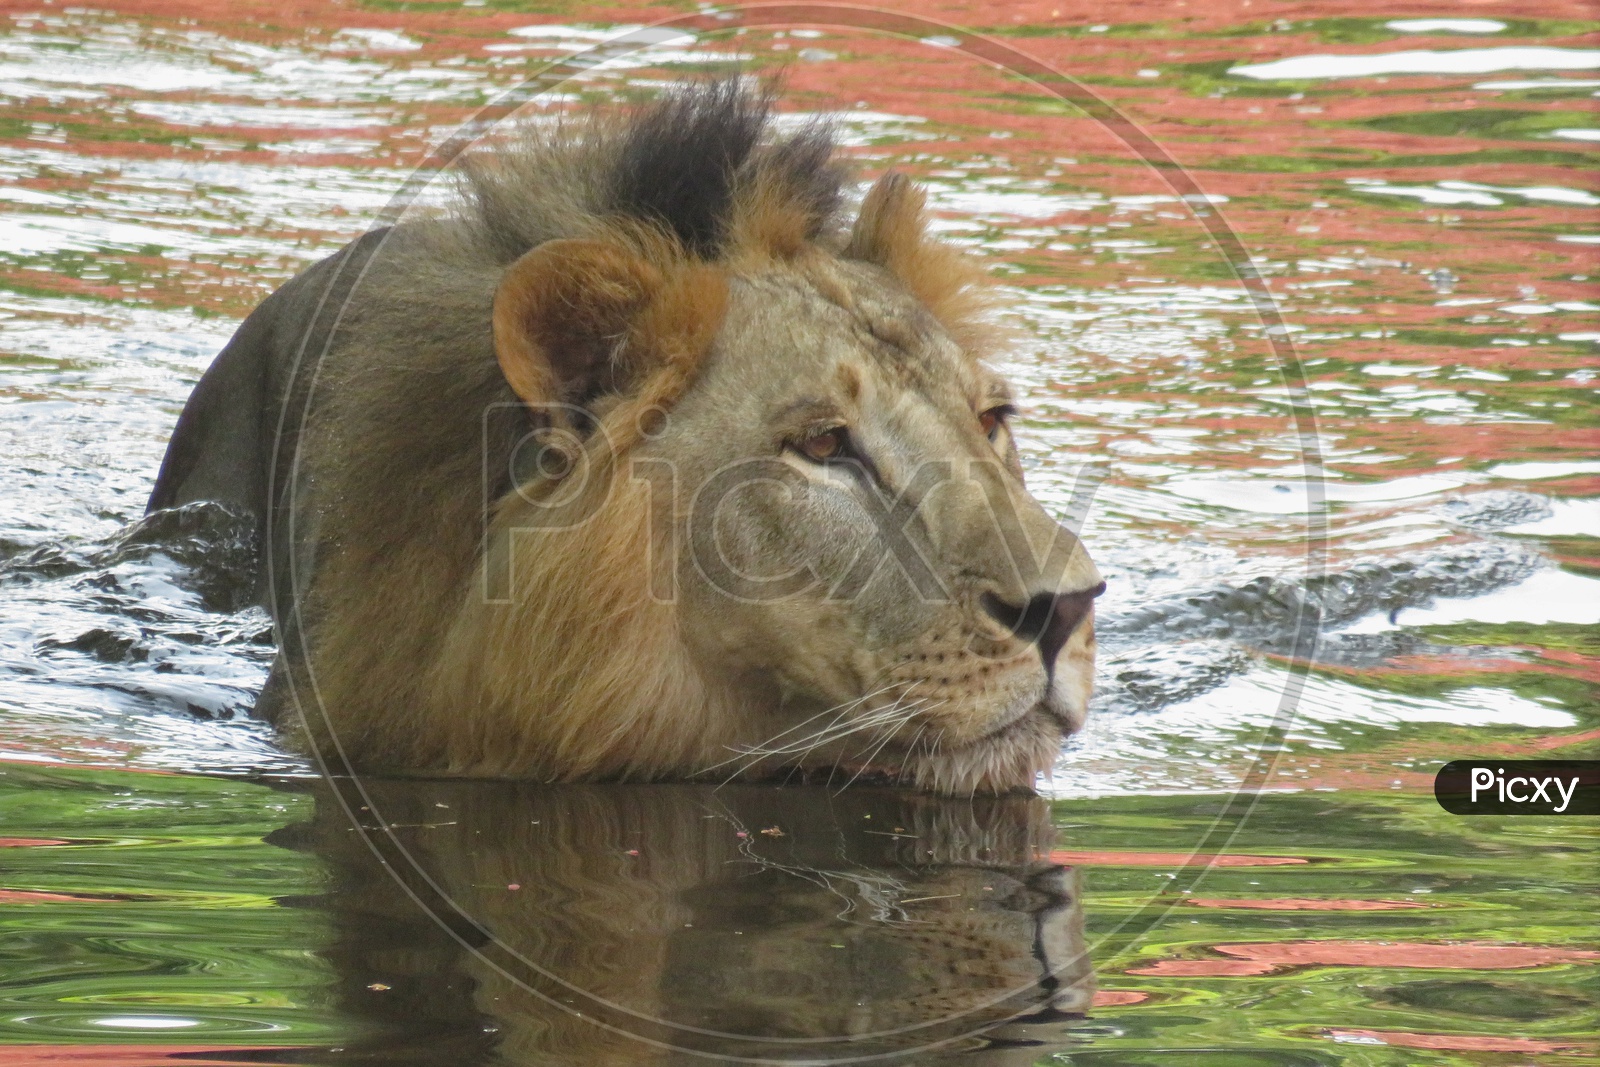 Male Lion Swimming